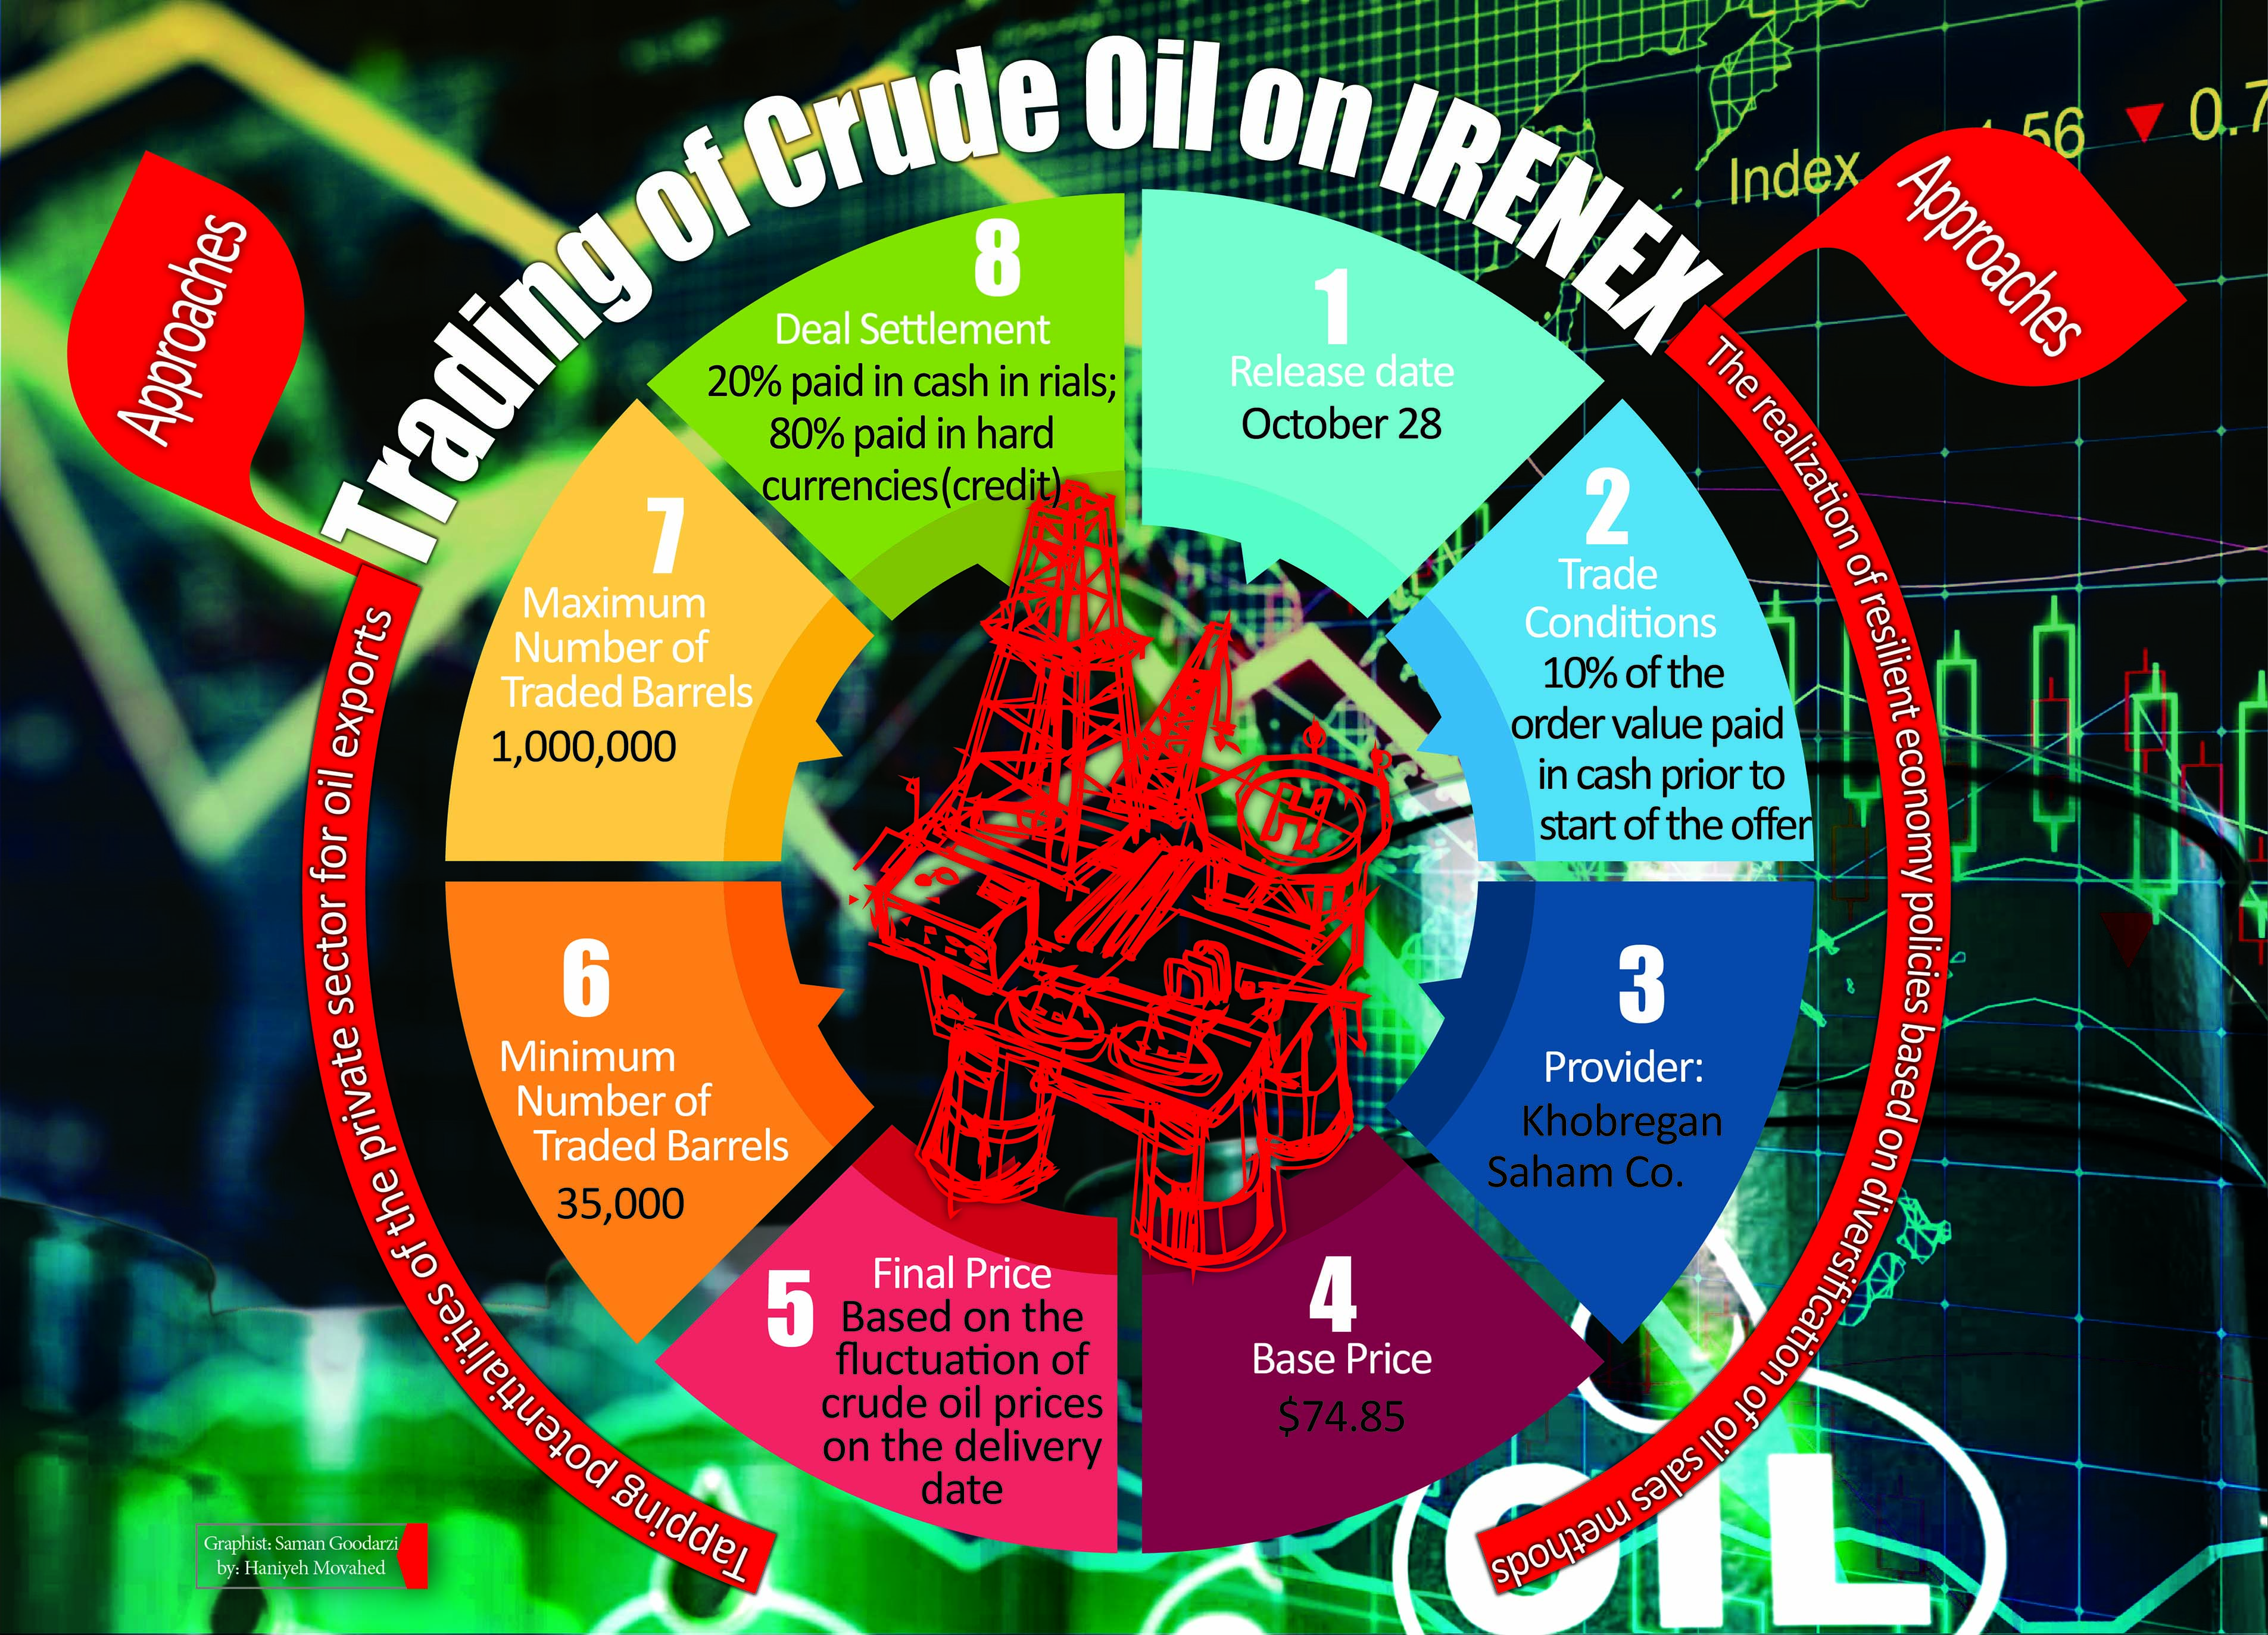 Trading of Crude Oil on IRENEX